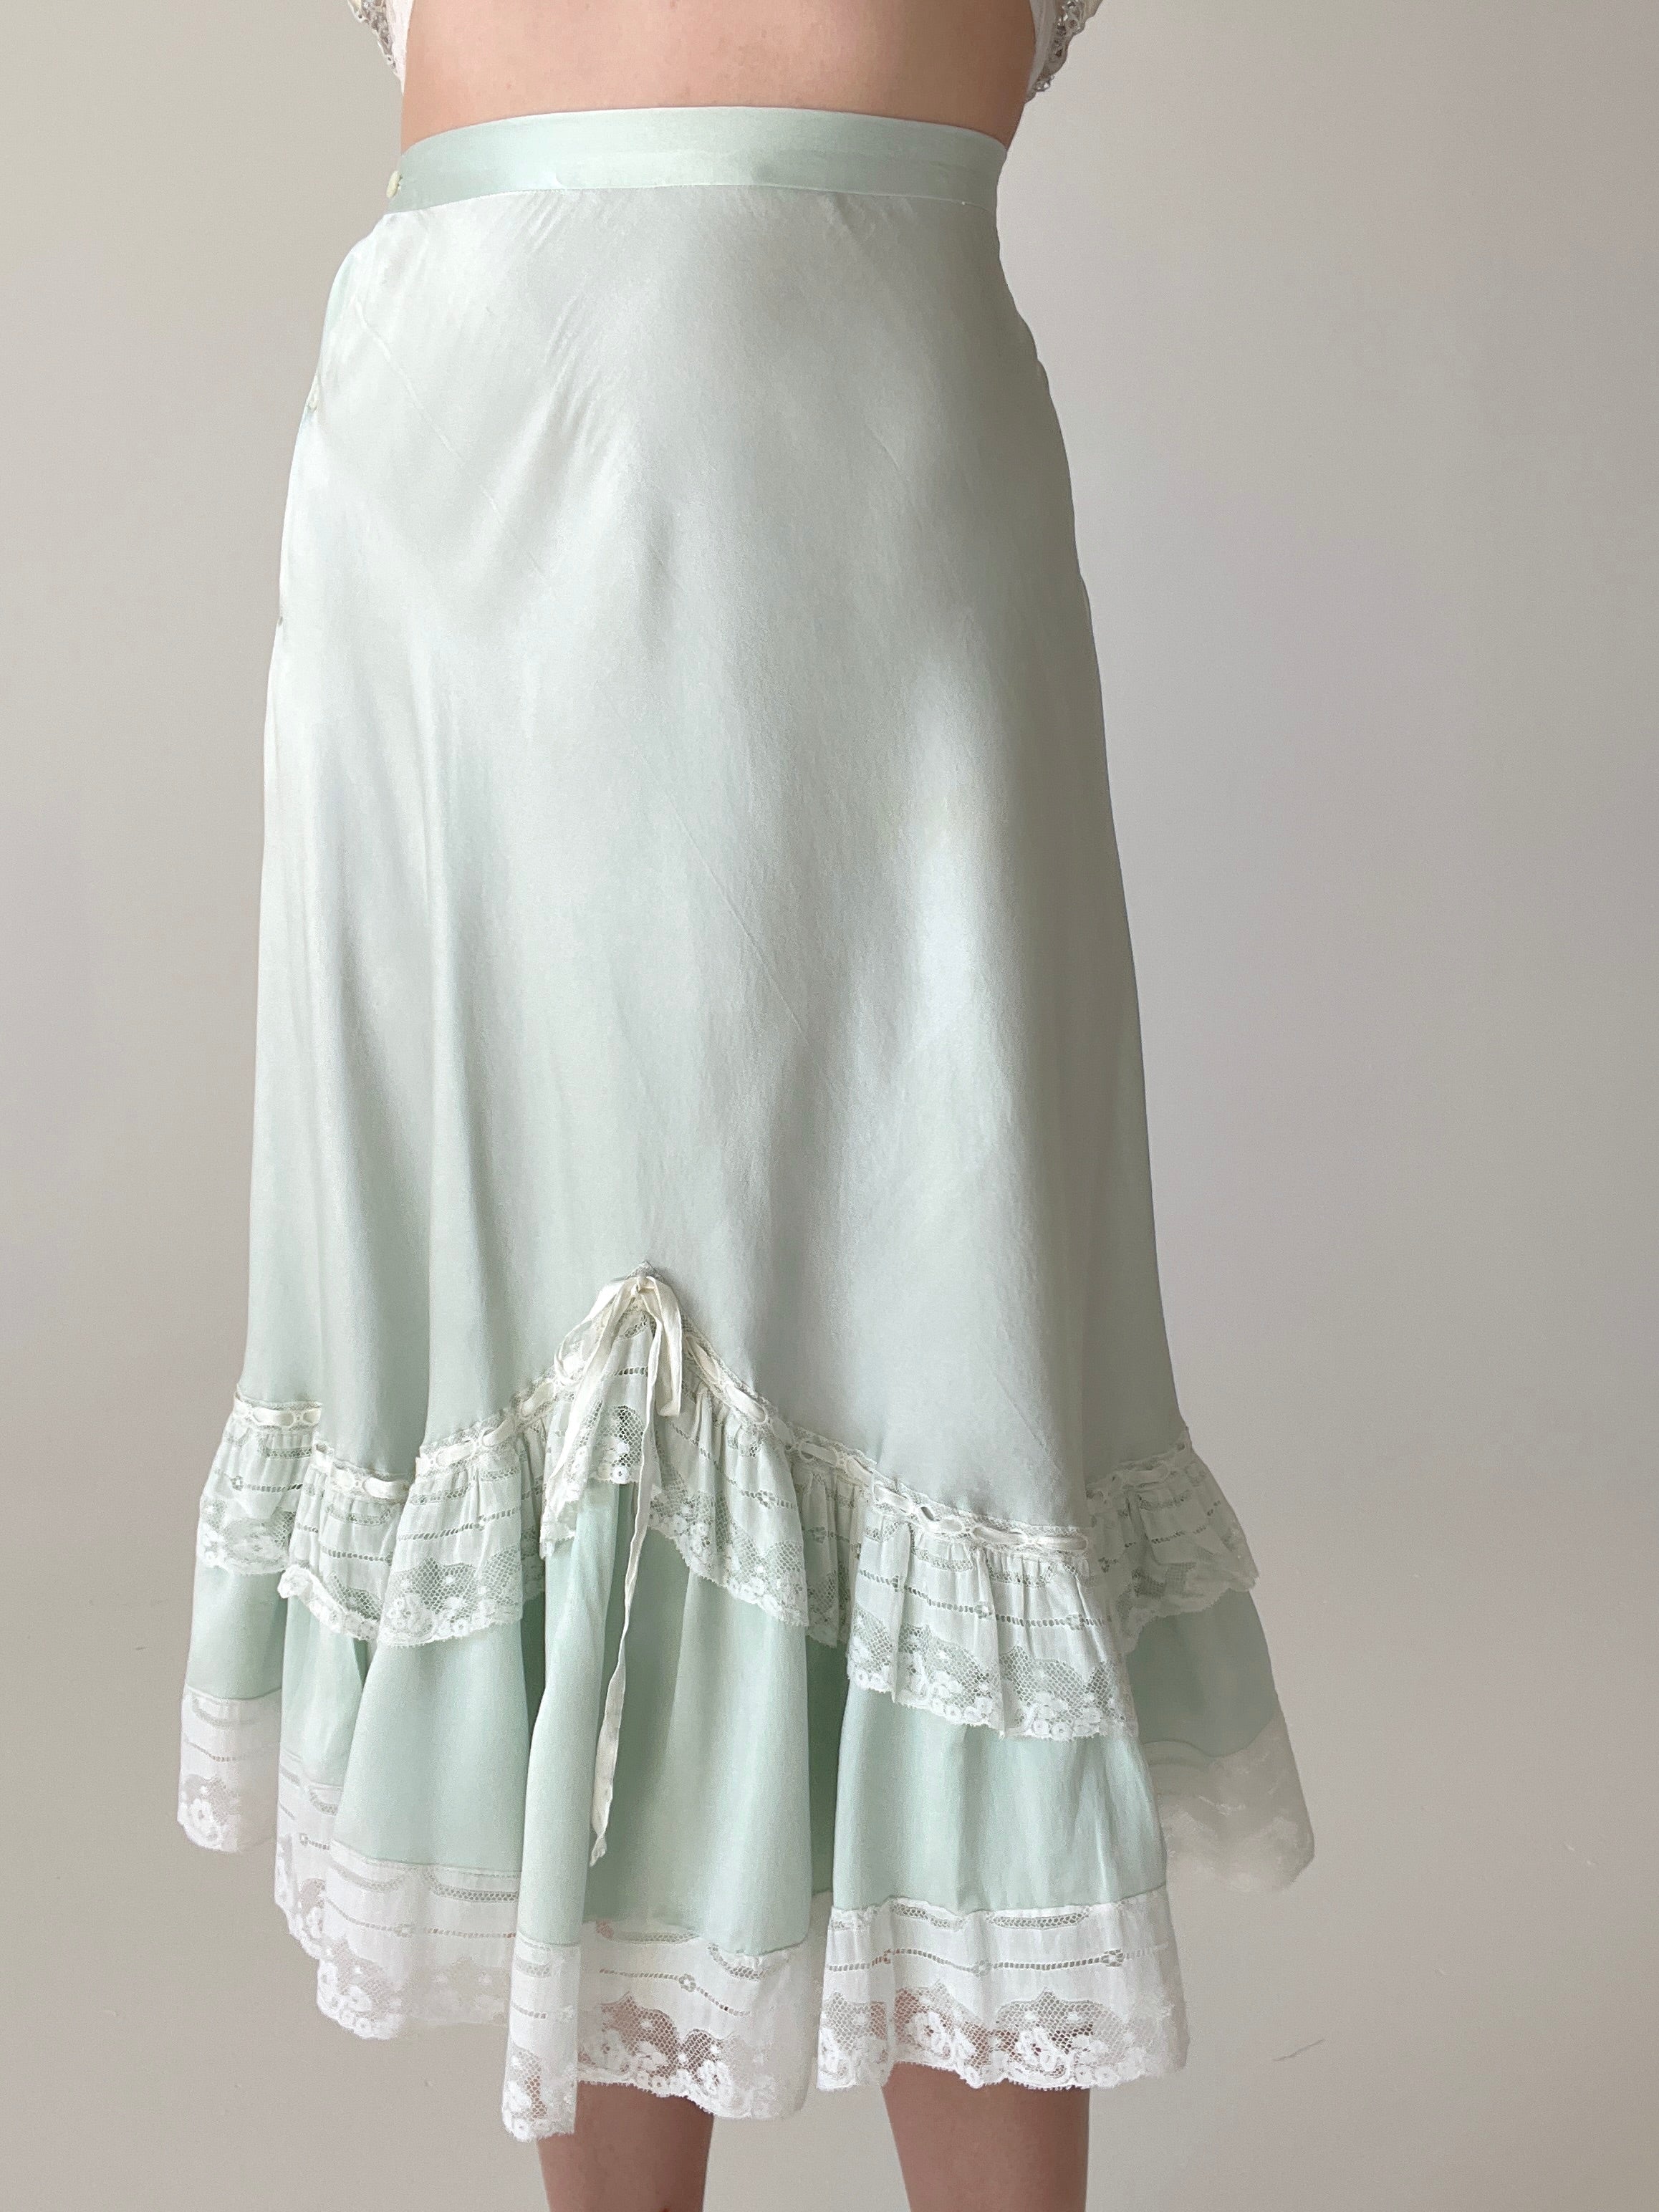 1950's Pale Aqua Silk Skirt with White Lace Ruffle